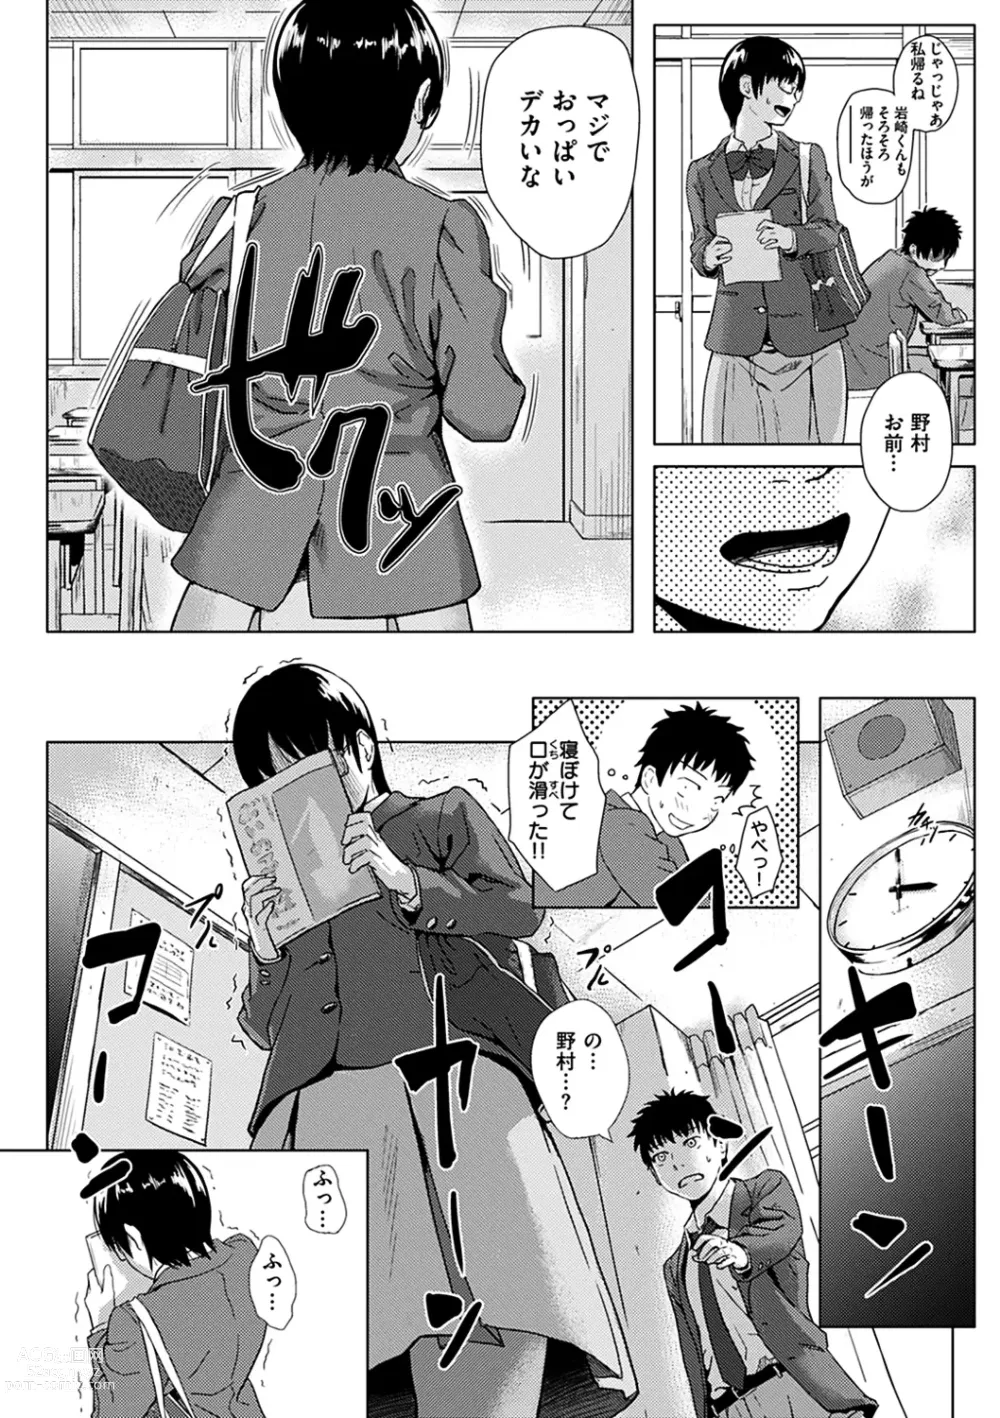 Page 10 of manga Kimi dake ni - I Only Love You...